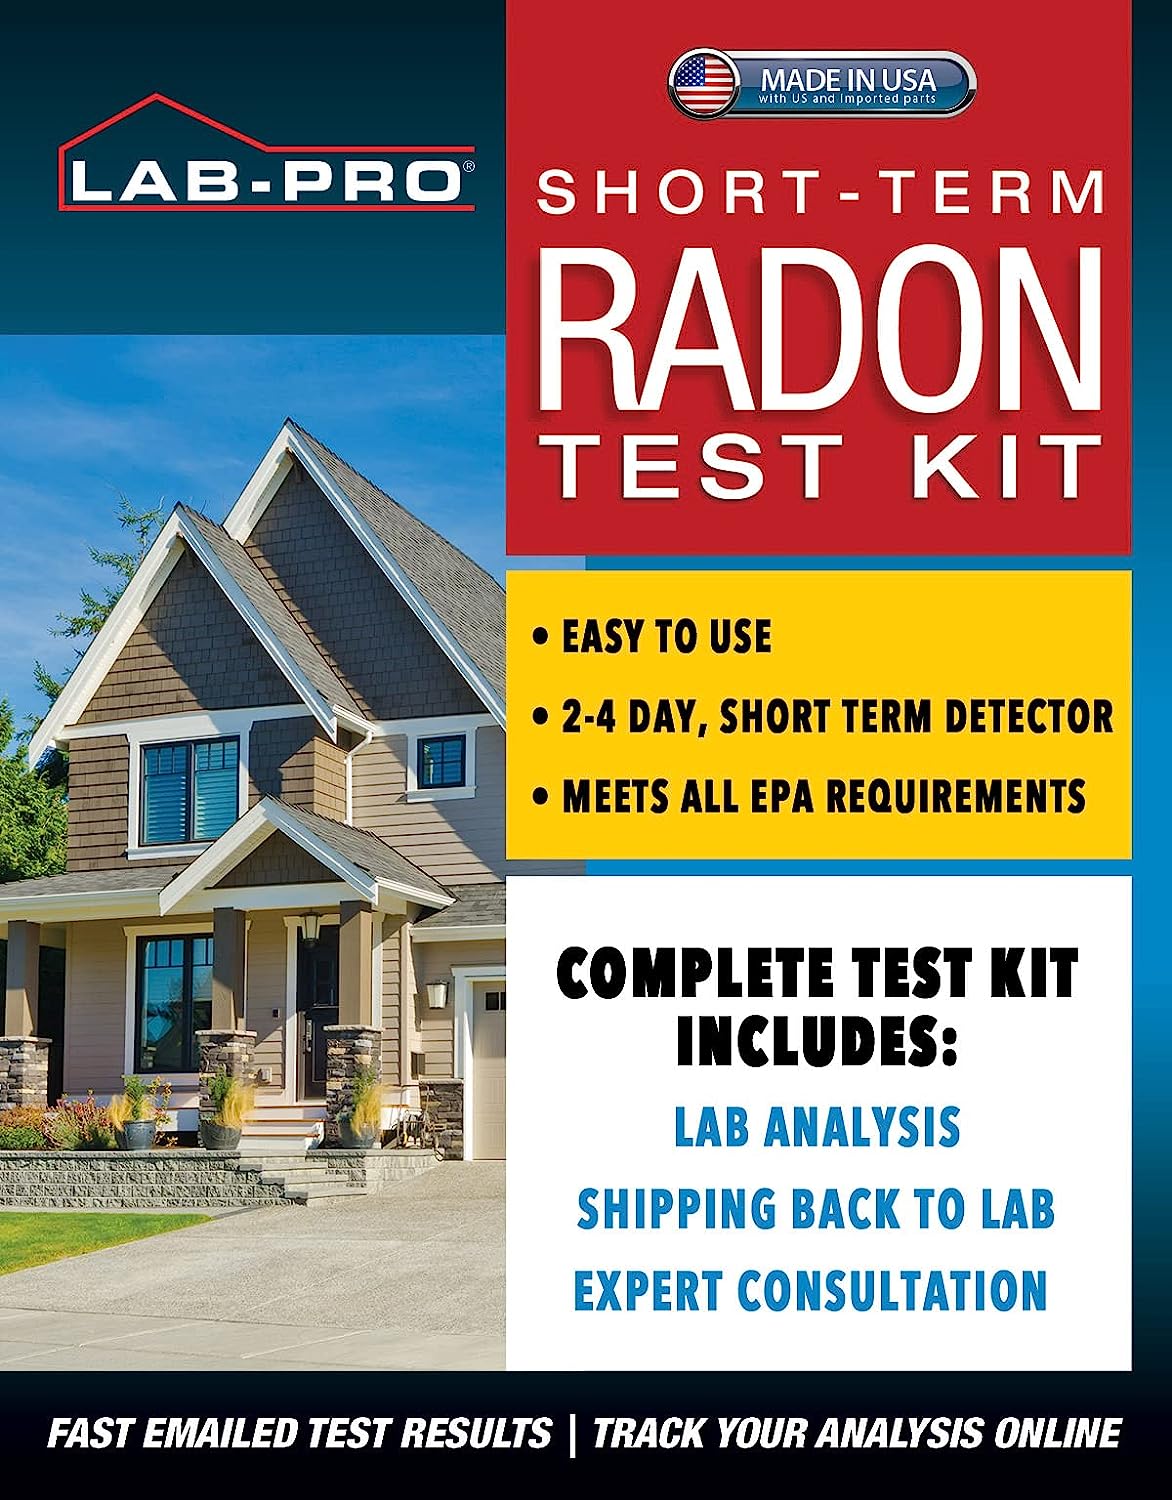 Radon Test Kit for Home - Radon Test Kit - Includes 1 [...]